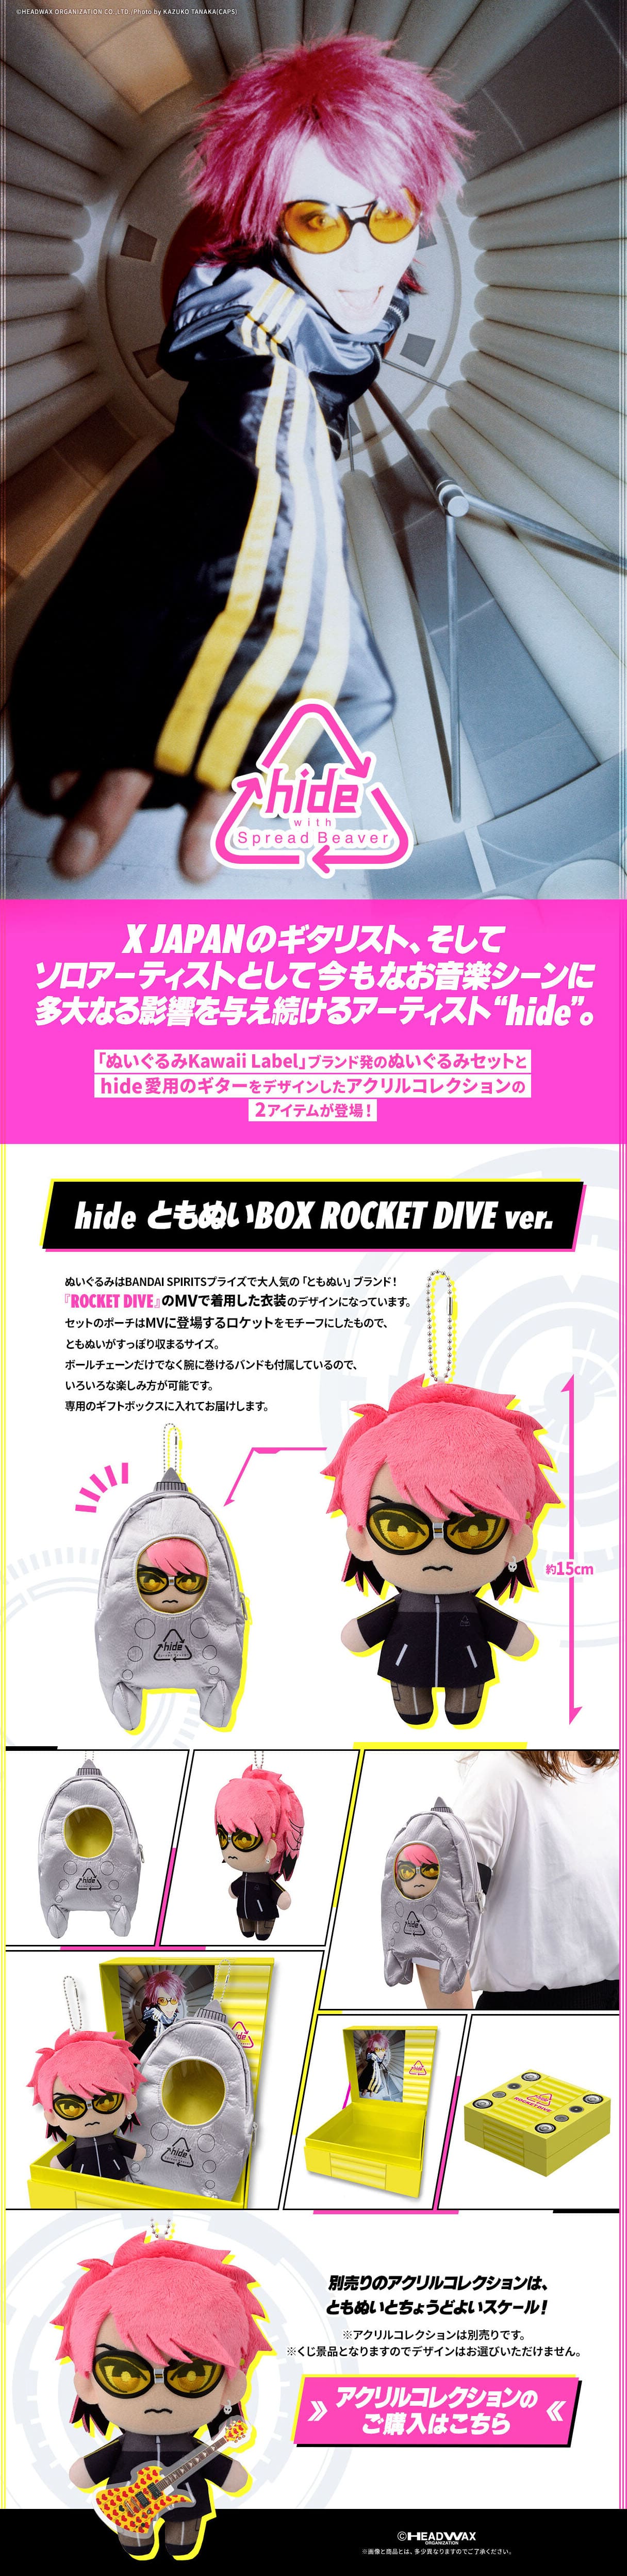 hide ともぬいBOX ROCKET DIVE ver._pc_1